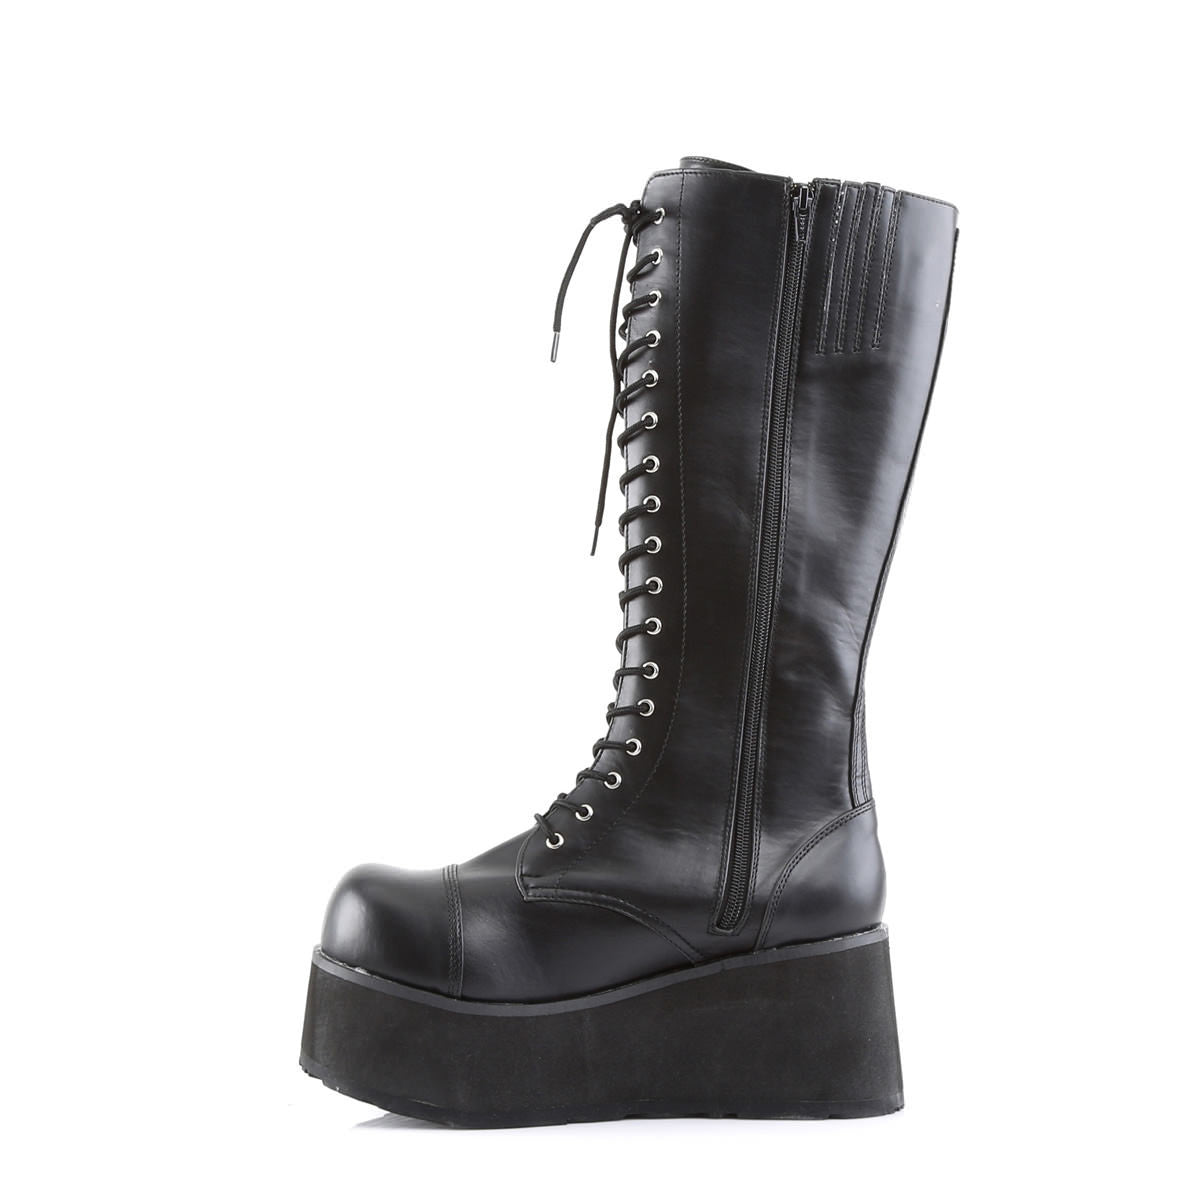 DEMONIA TRASHVILLE-502 Men's Black Pu Vegan Boots - Shoecup.com - 2